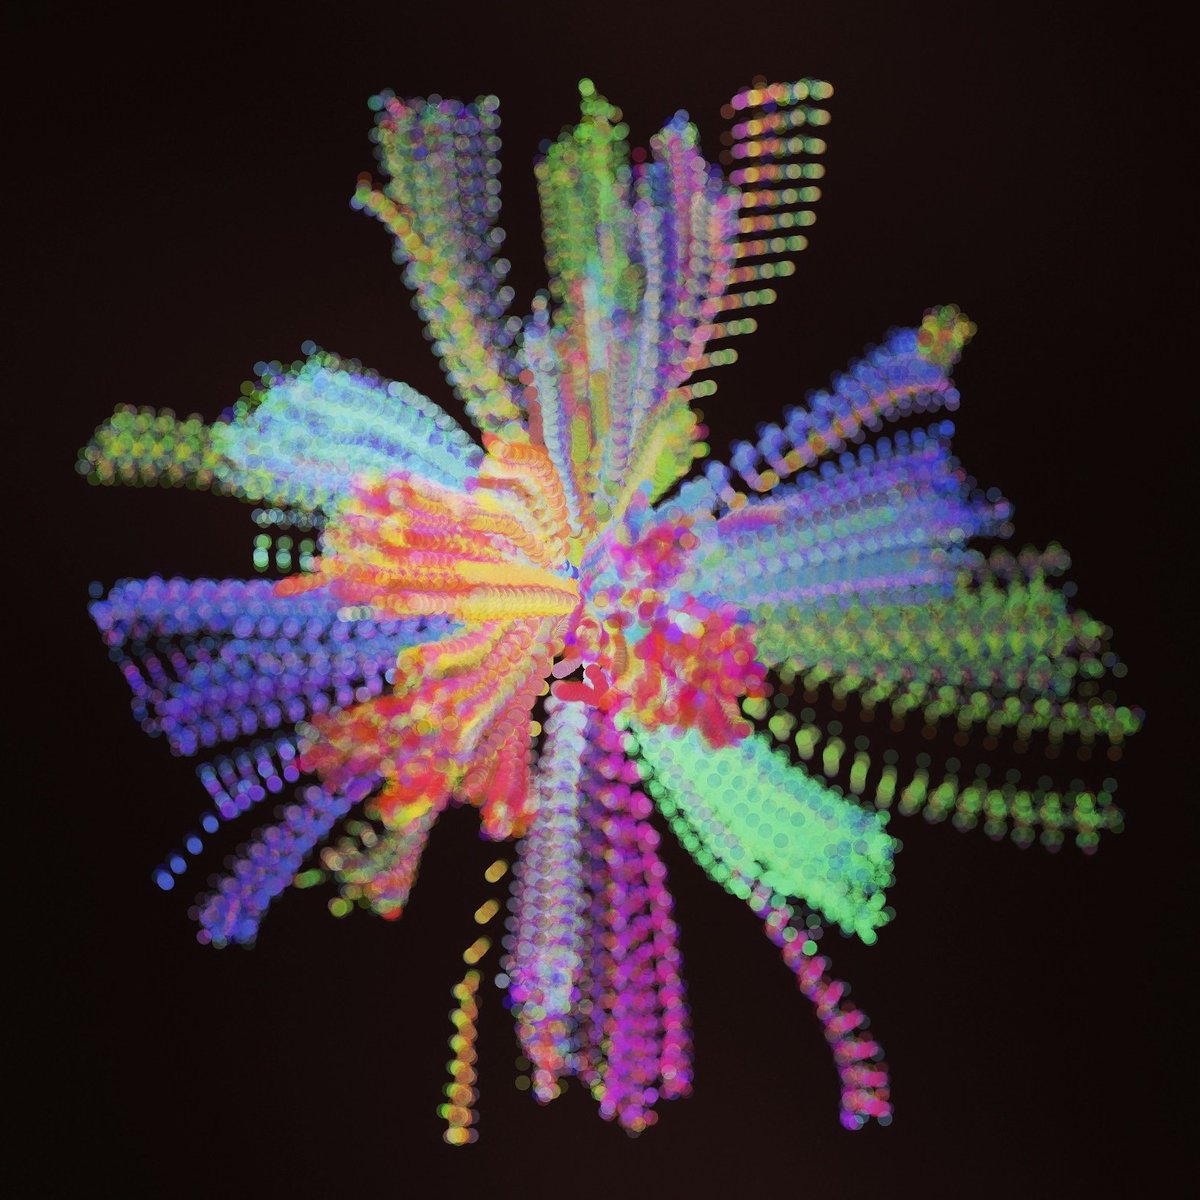 Turning data into art. #artOfScience #singlecells #tsne #bloodrose #bioinformatics